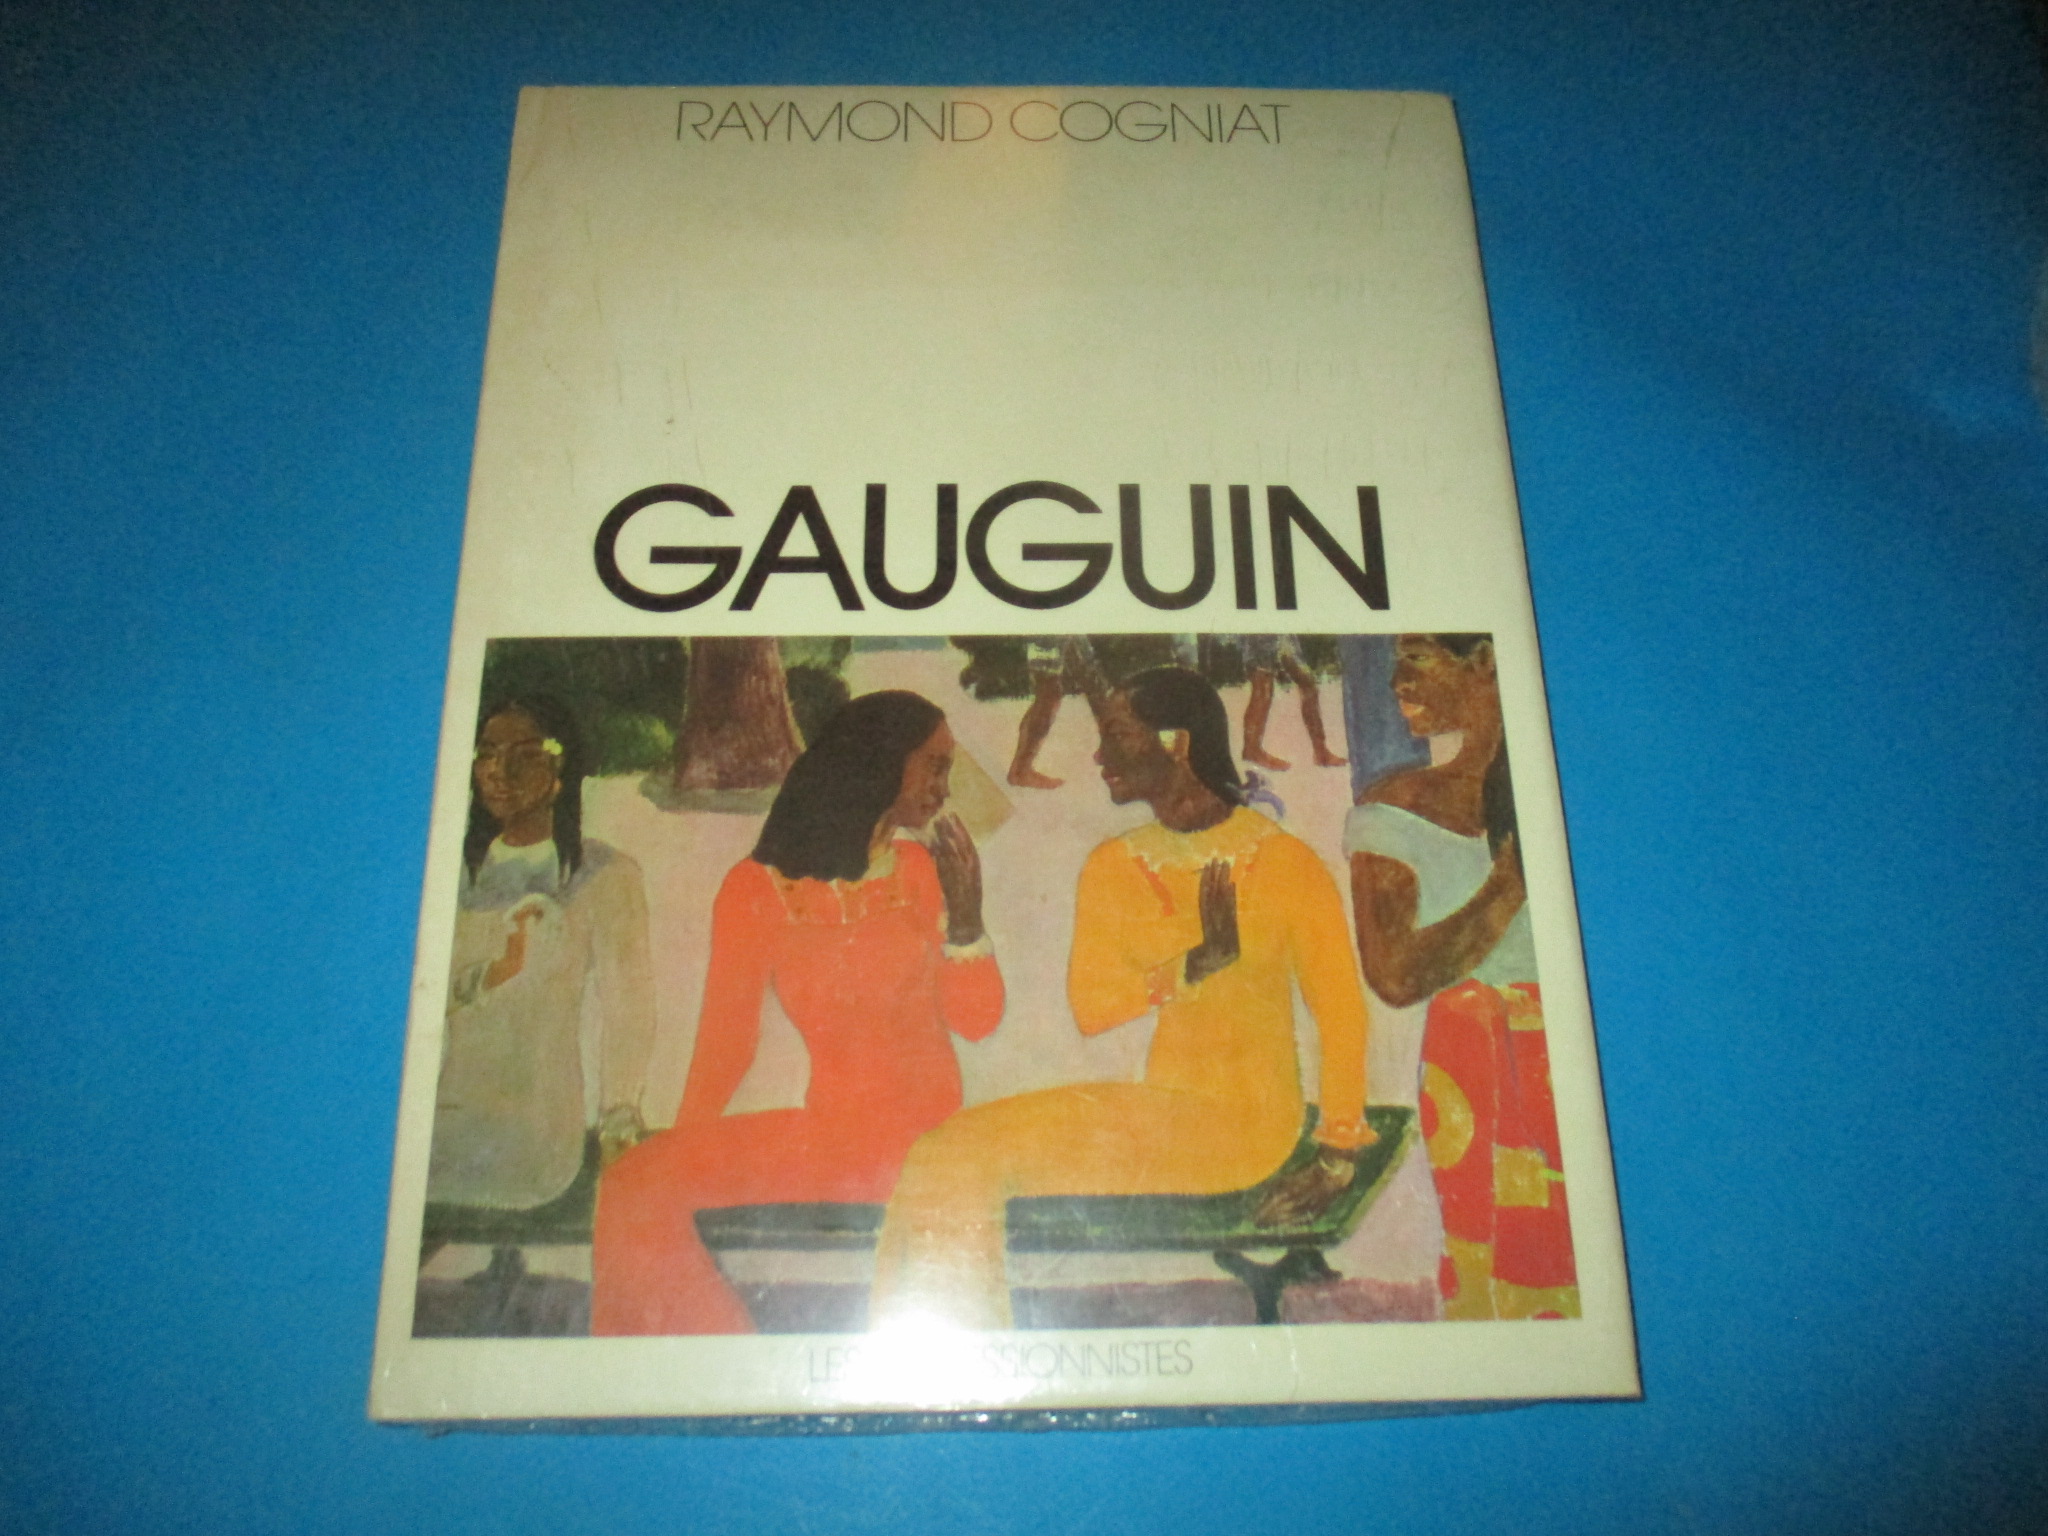 Gauguin, Raymond Cogniat, Les Impressionnistes Princesse neuf emballé